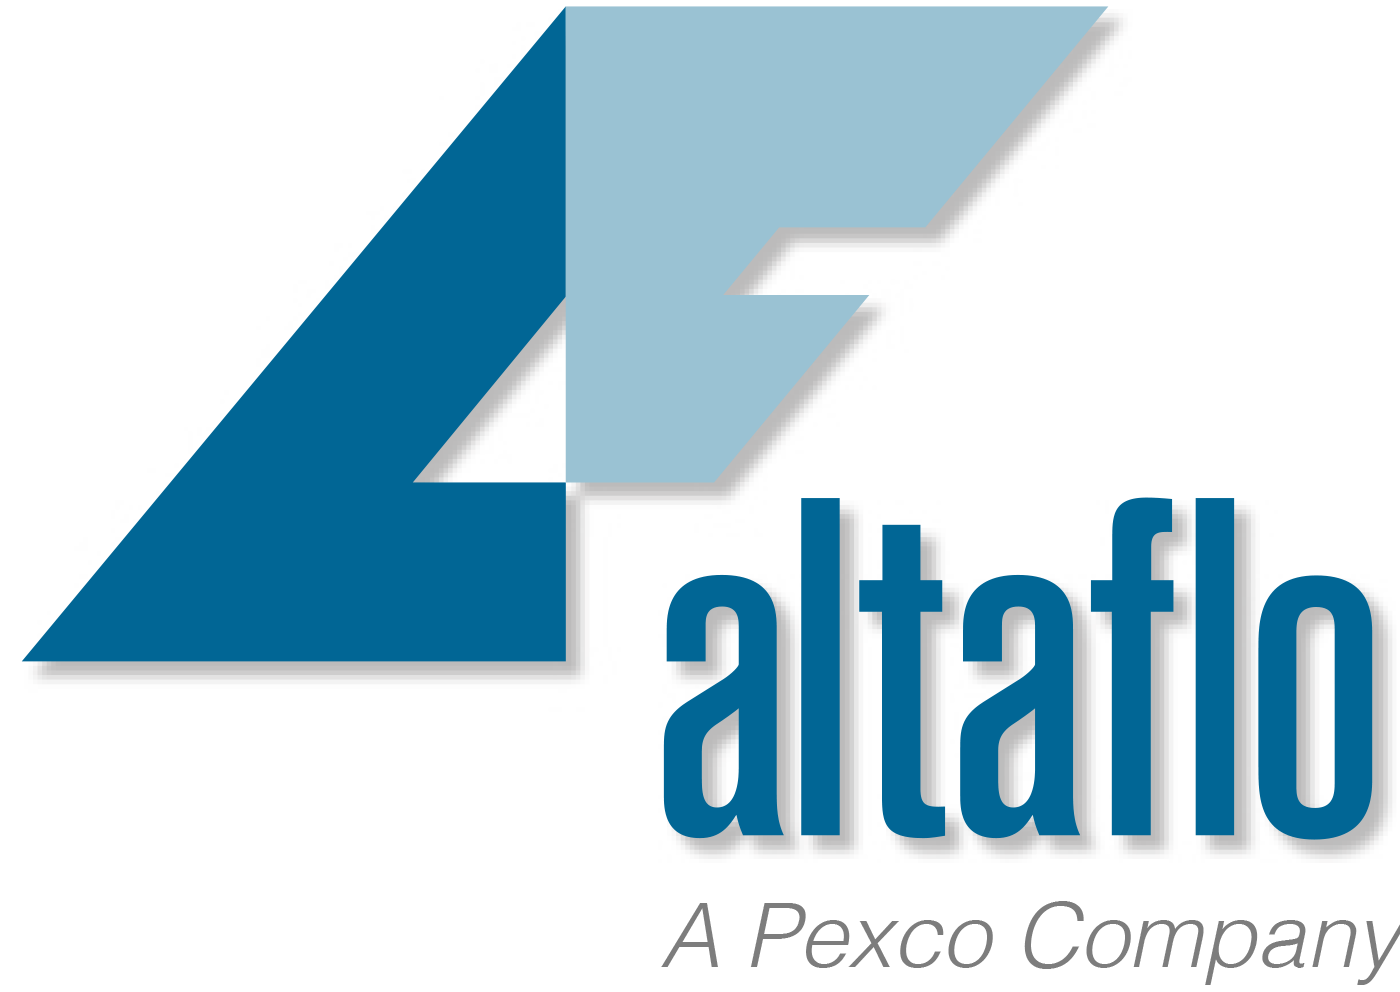 Altaflo logo